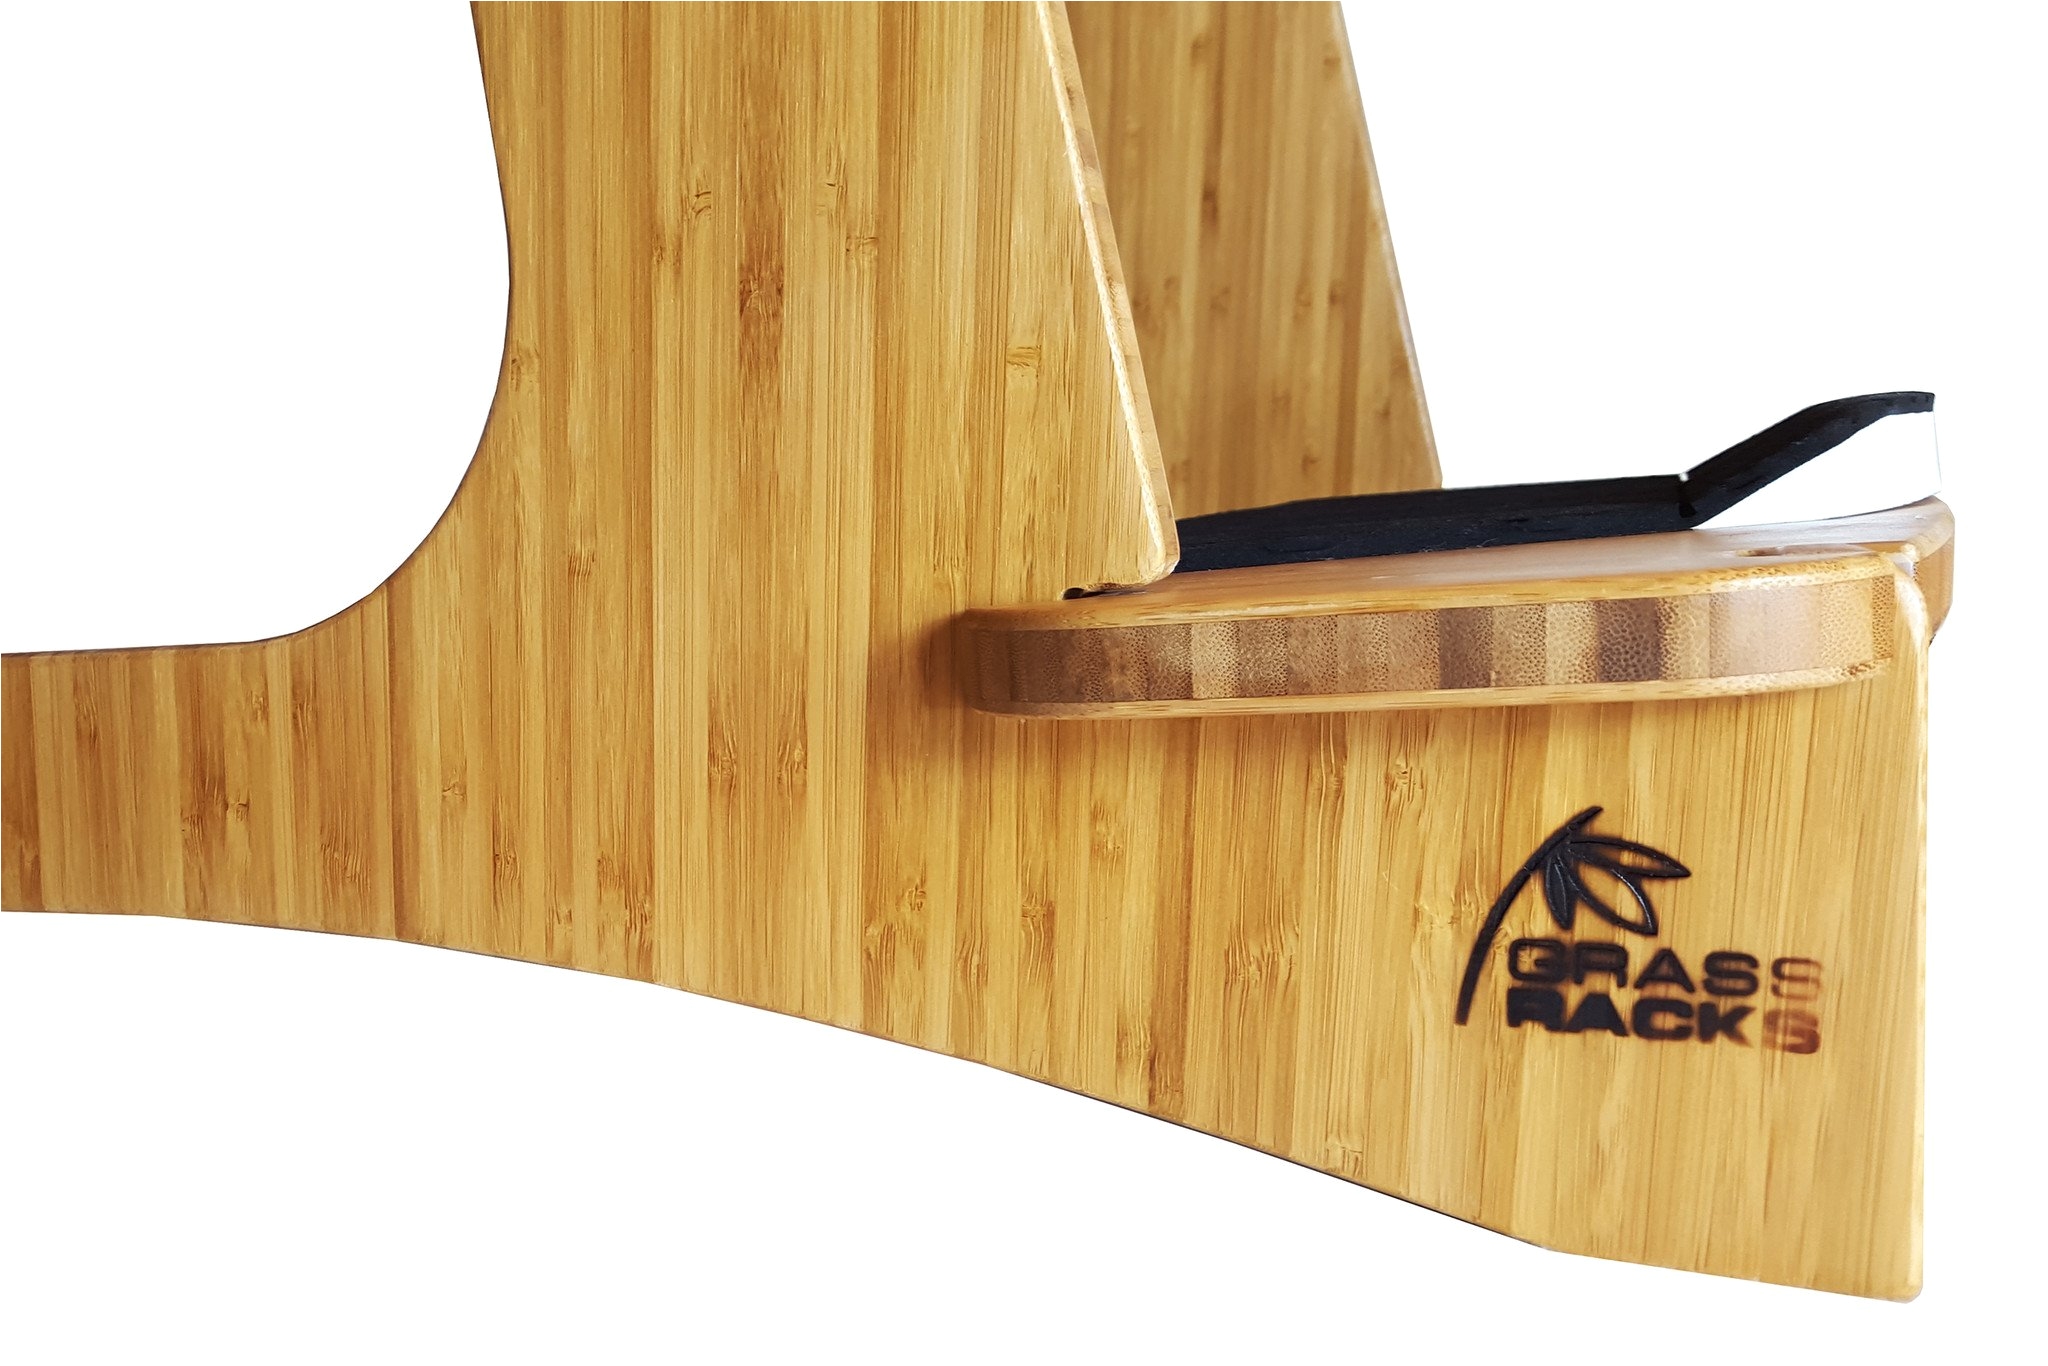 in store paddleboard surf rack by grassracks freestanding surfboard rack with kicker